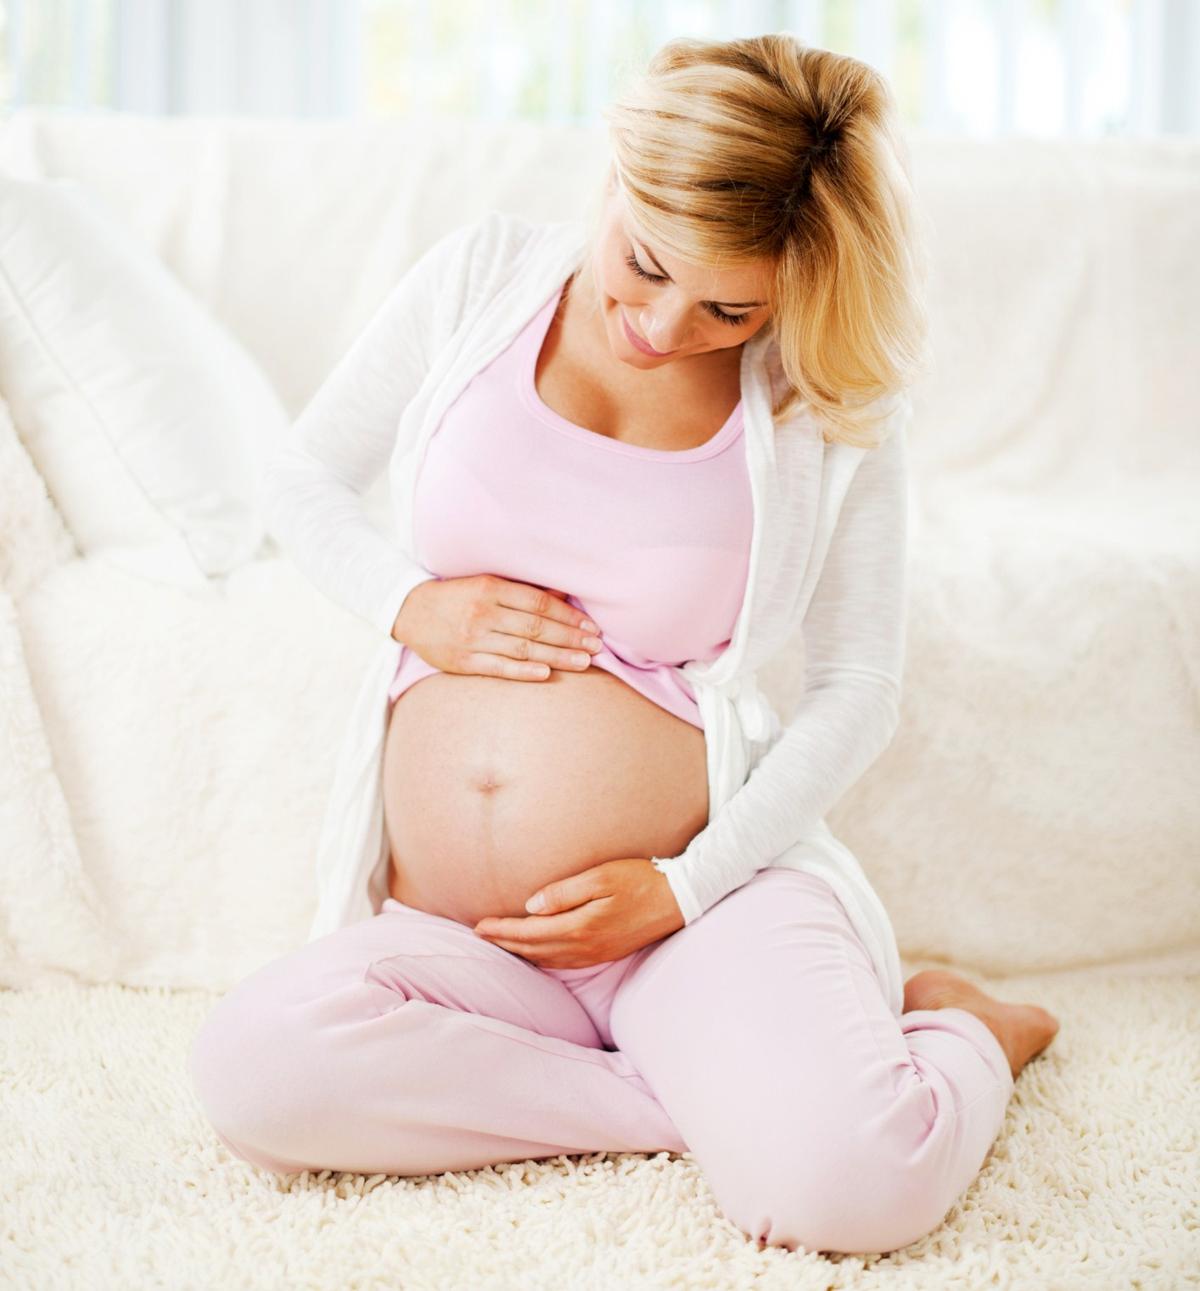 Pregnancy Myths